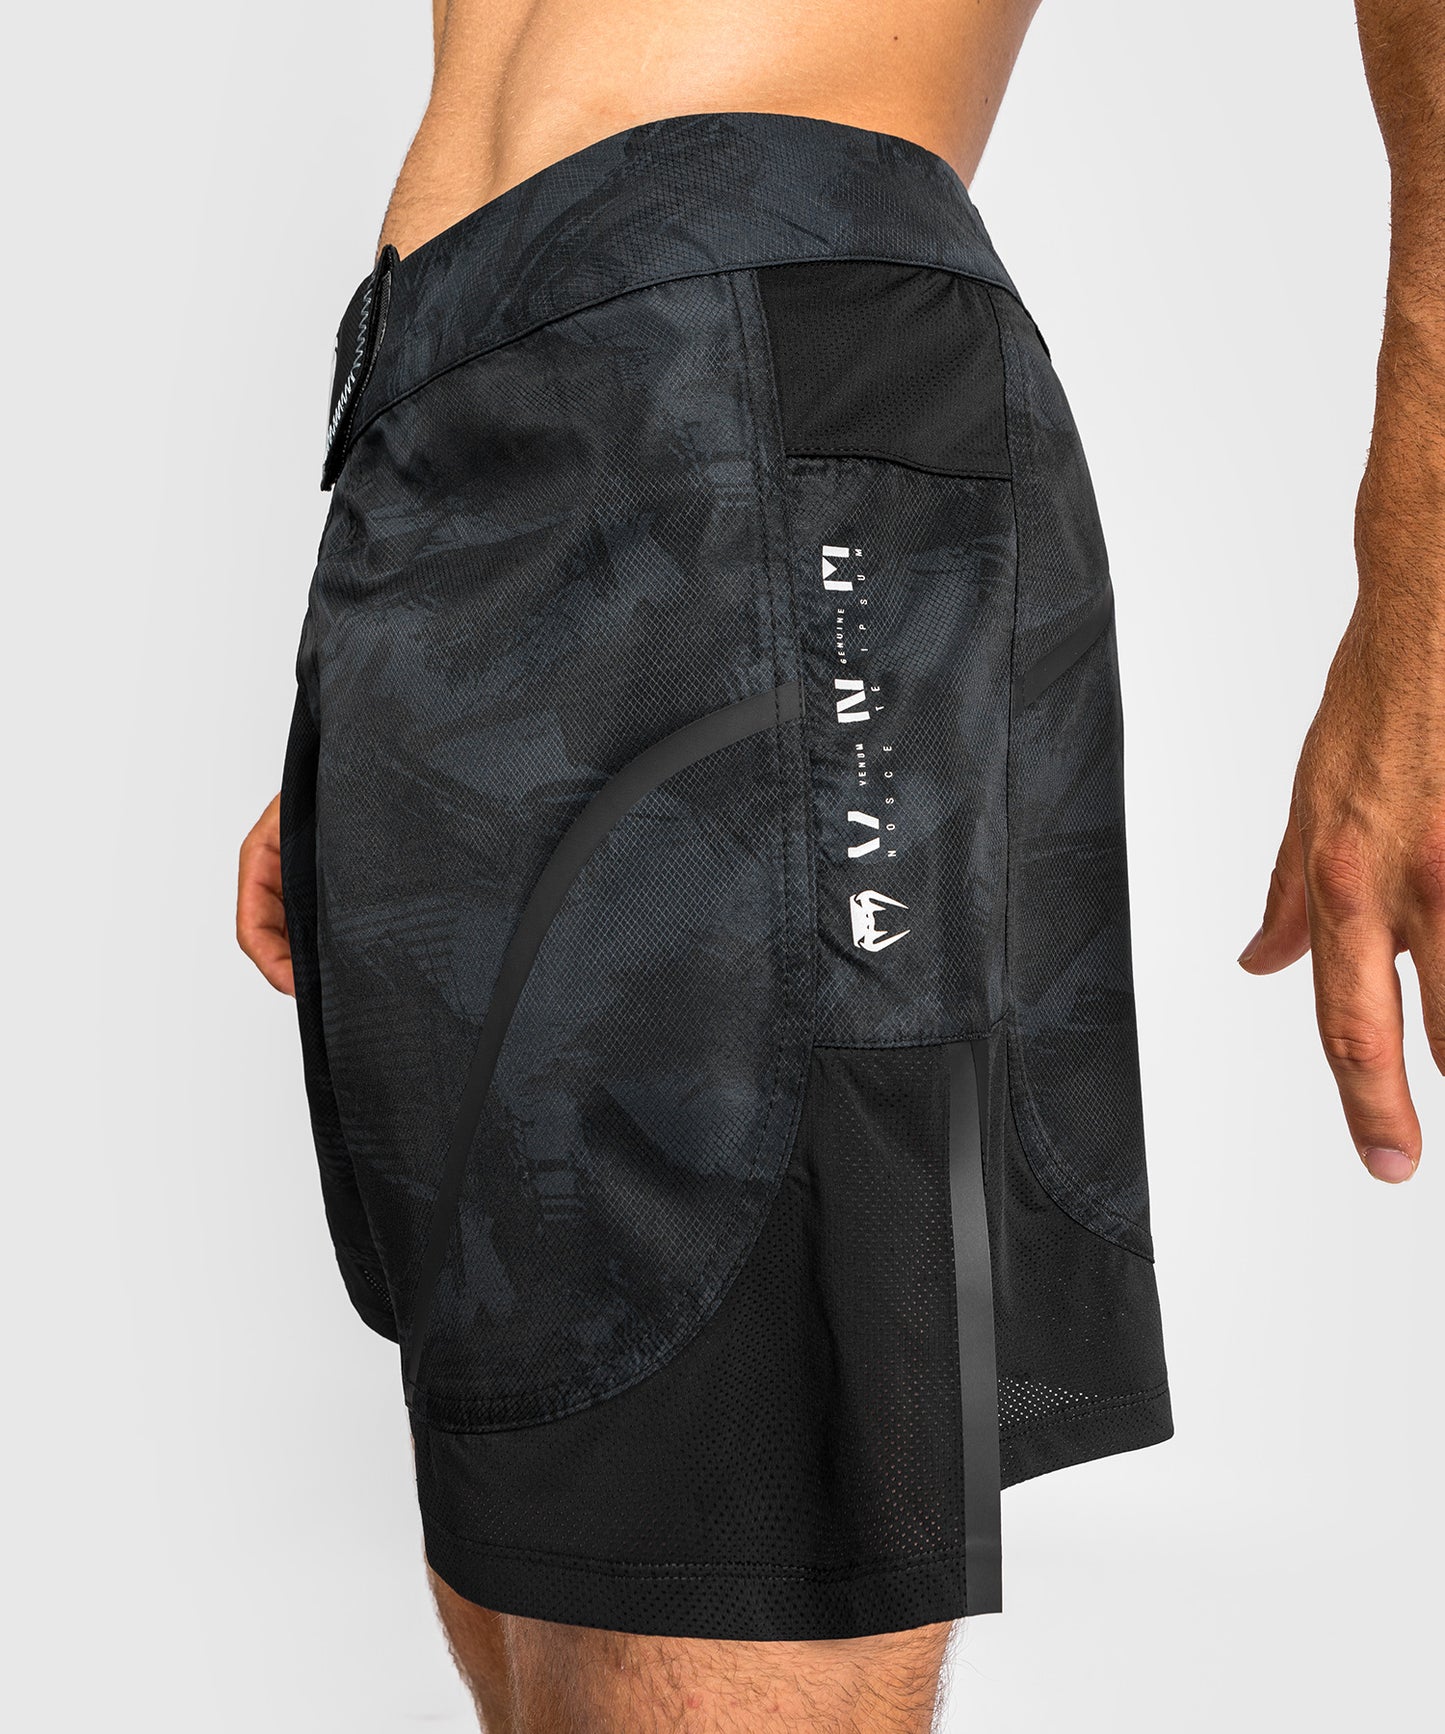 Pantalones cortos de combate Venum Electron 3.0 - Negro